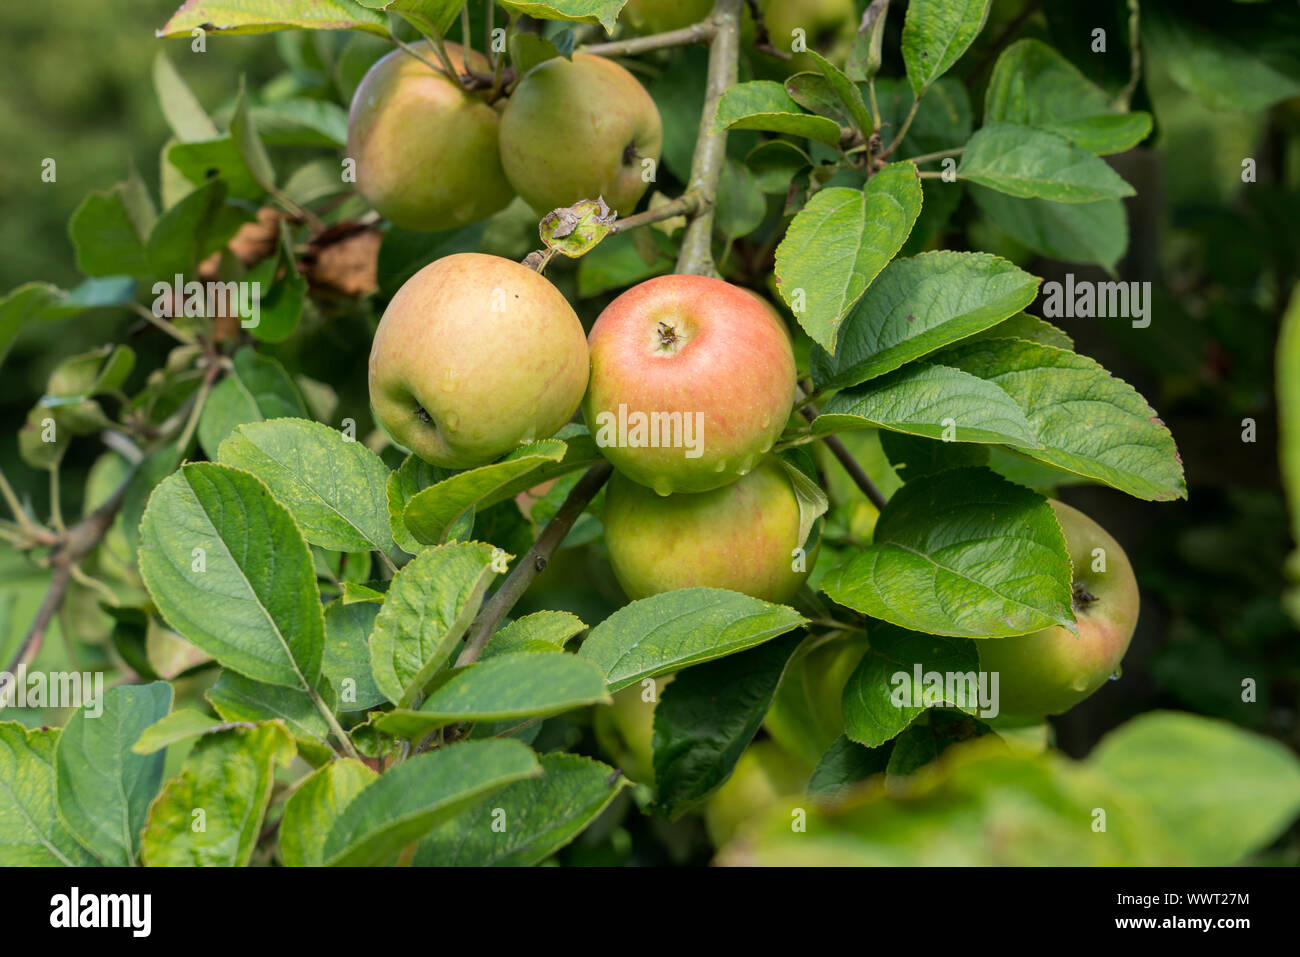 Holländischer Prinz, Dutch prince, apple, old variety, Germany, Europe Stock Photo